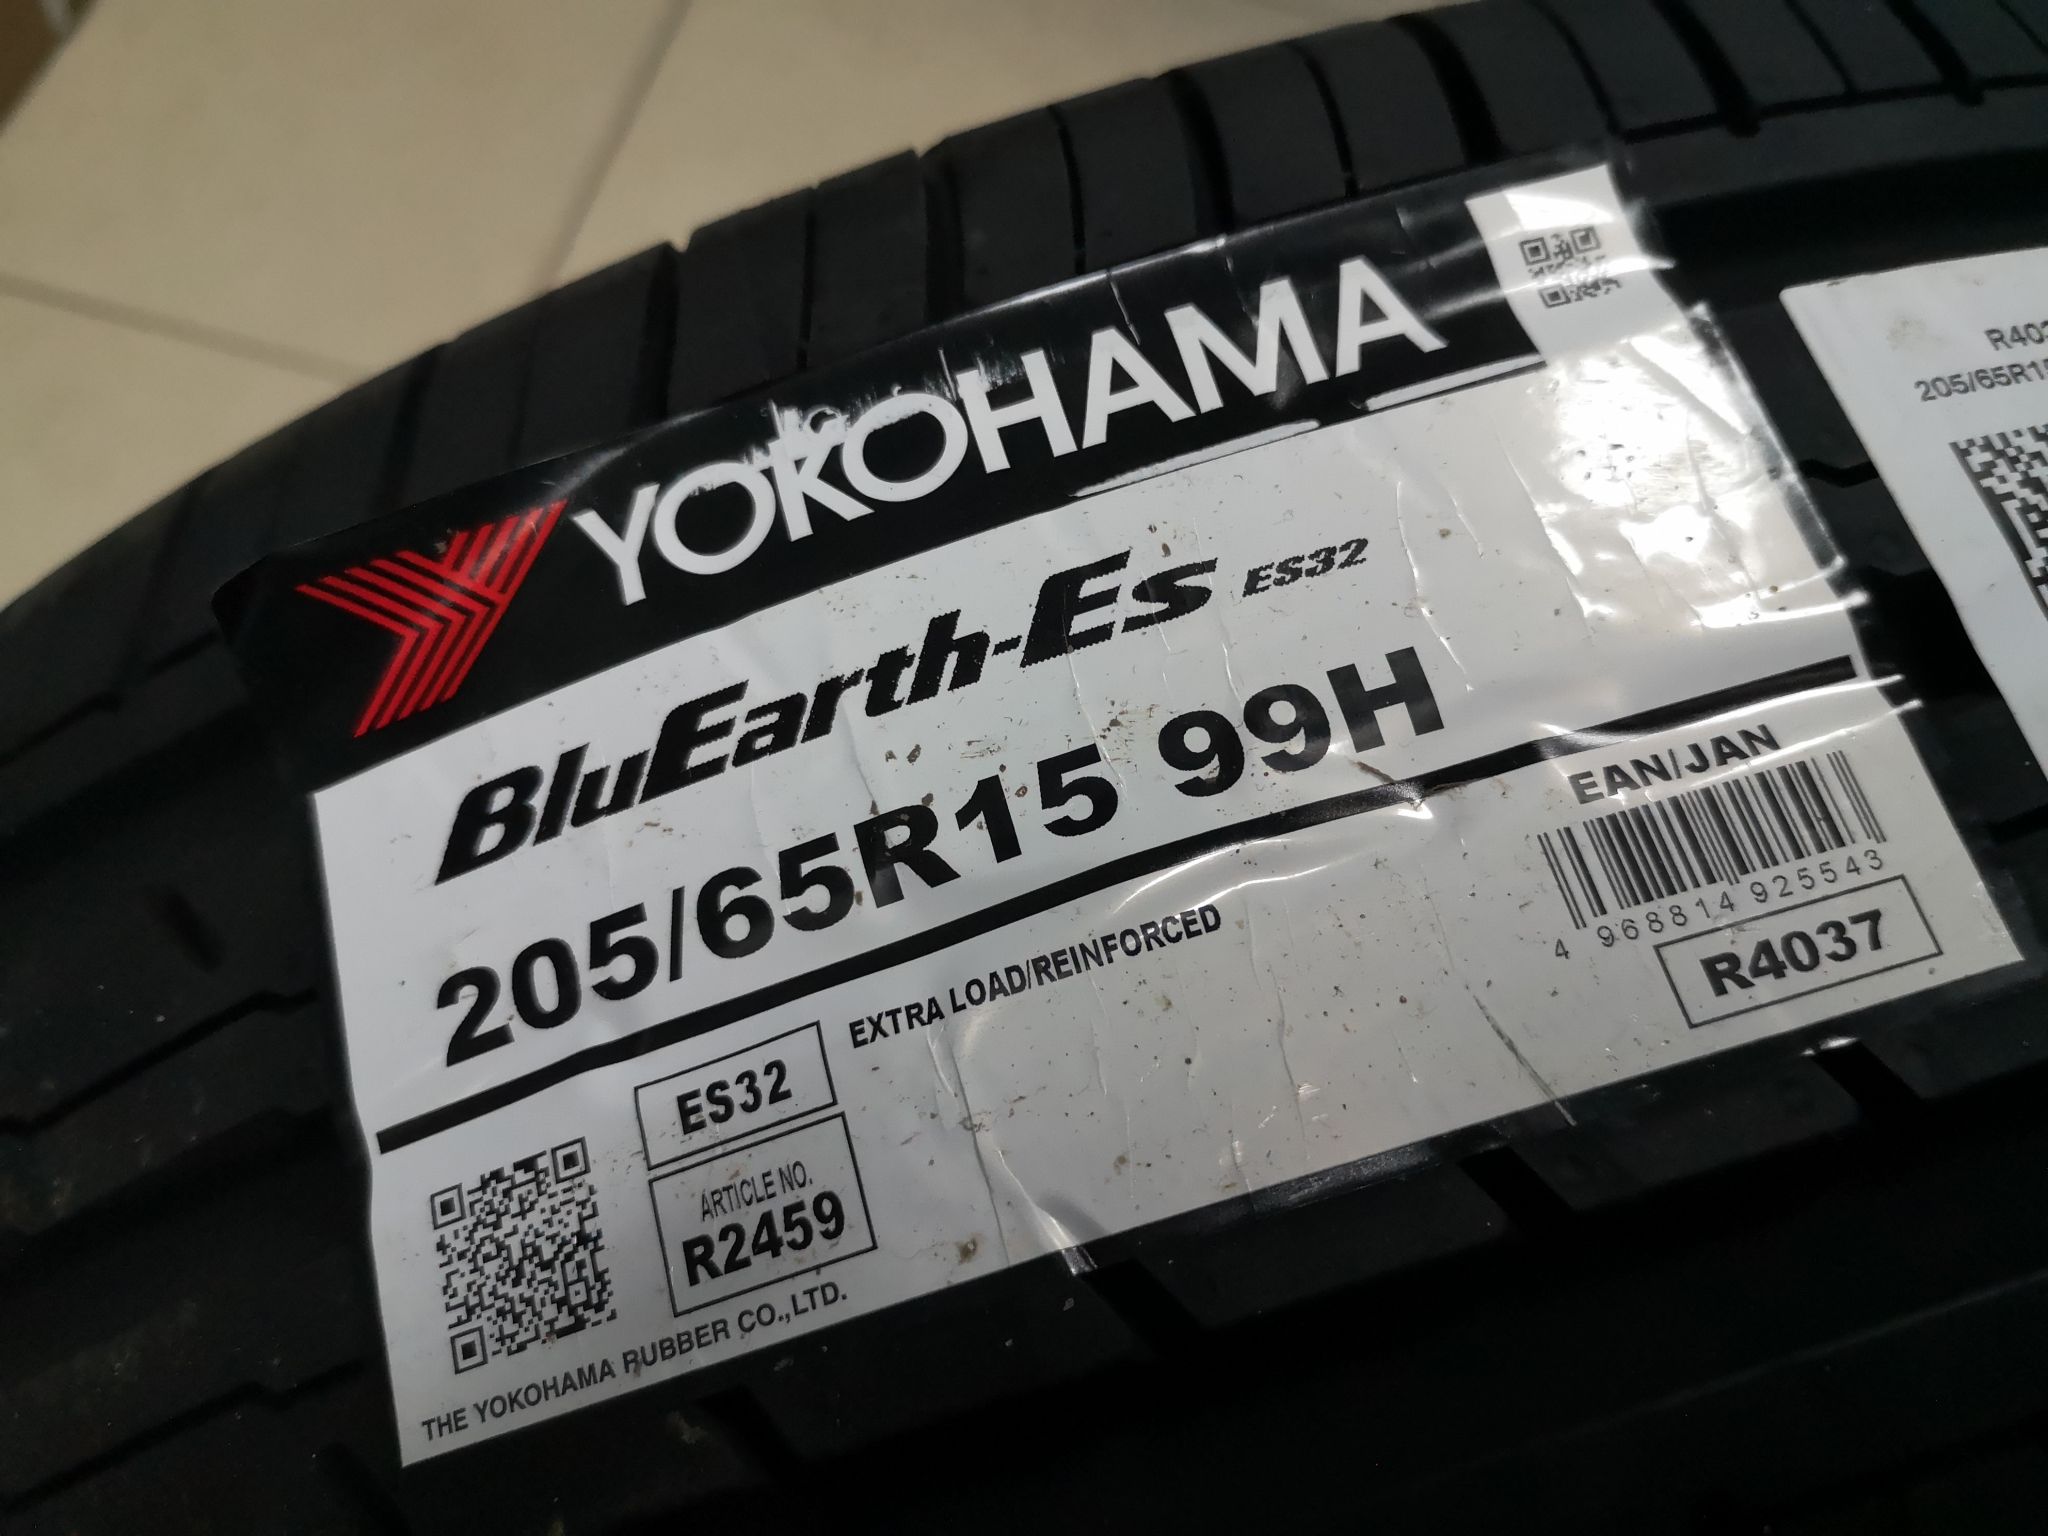 Yokohama bluearth es32 185 65 r15 купить